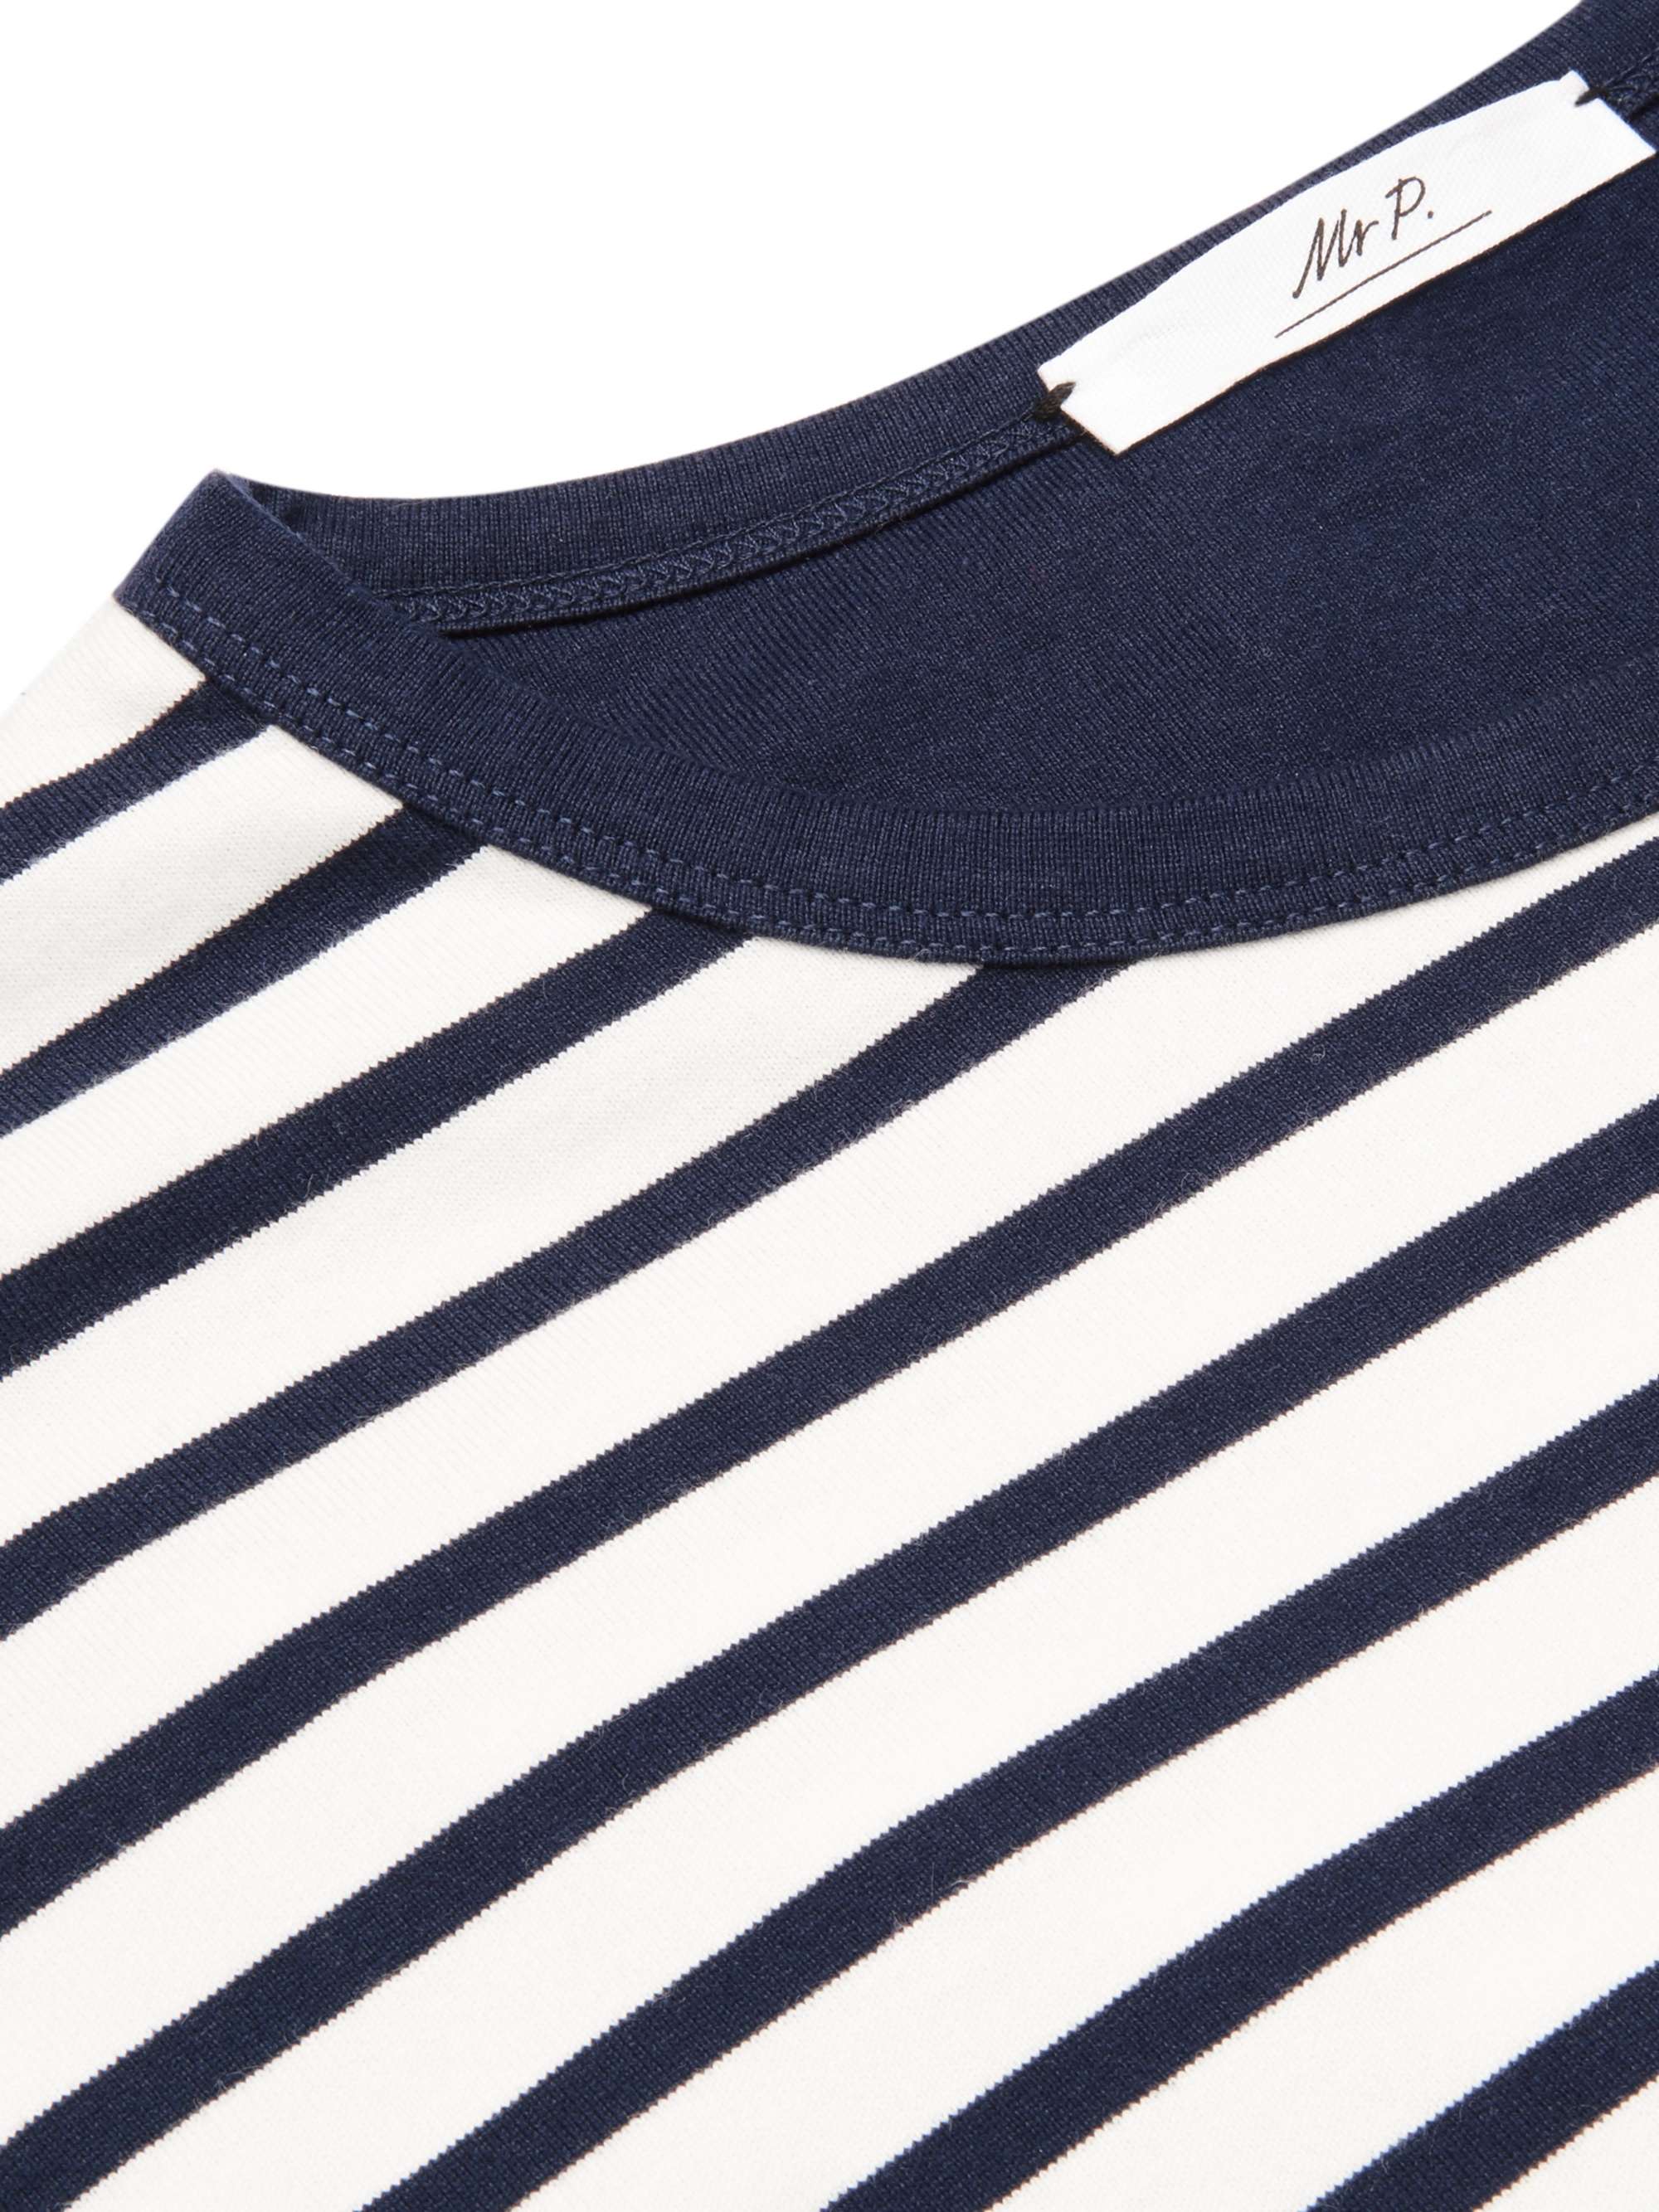 MR P. Striped Long-Sleeved Cotton-Jersey T-Shirt for Men | MR PORTER